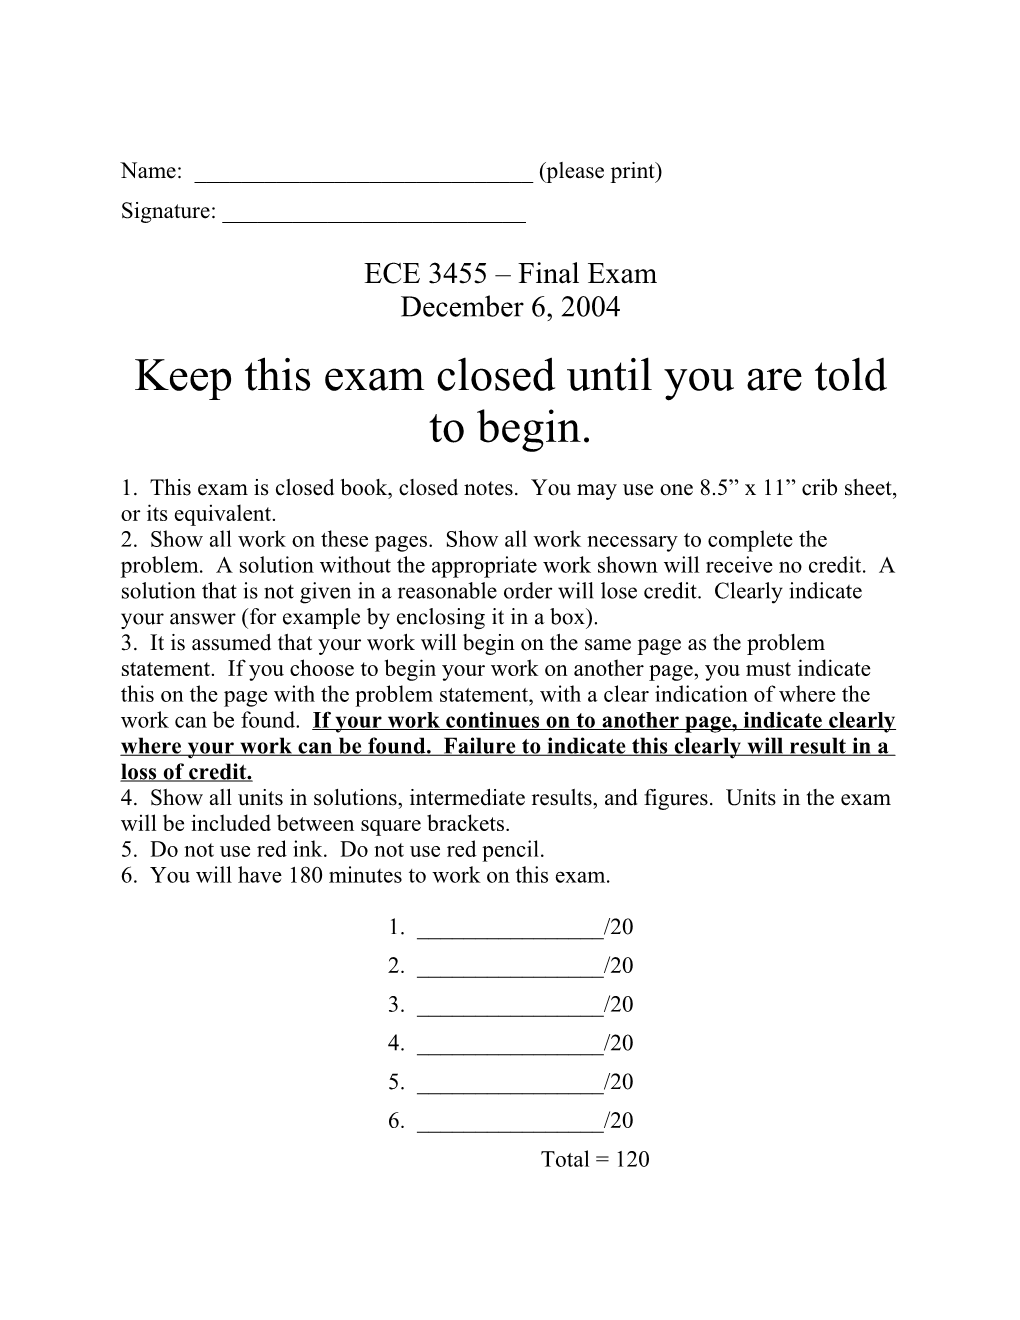 ECE 3455 Final Exam December 6, 2004 Page 1